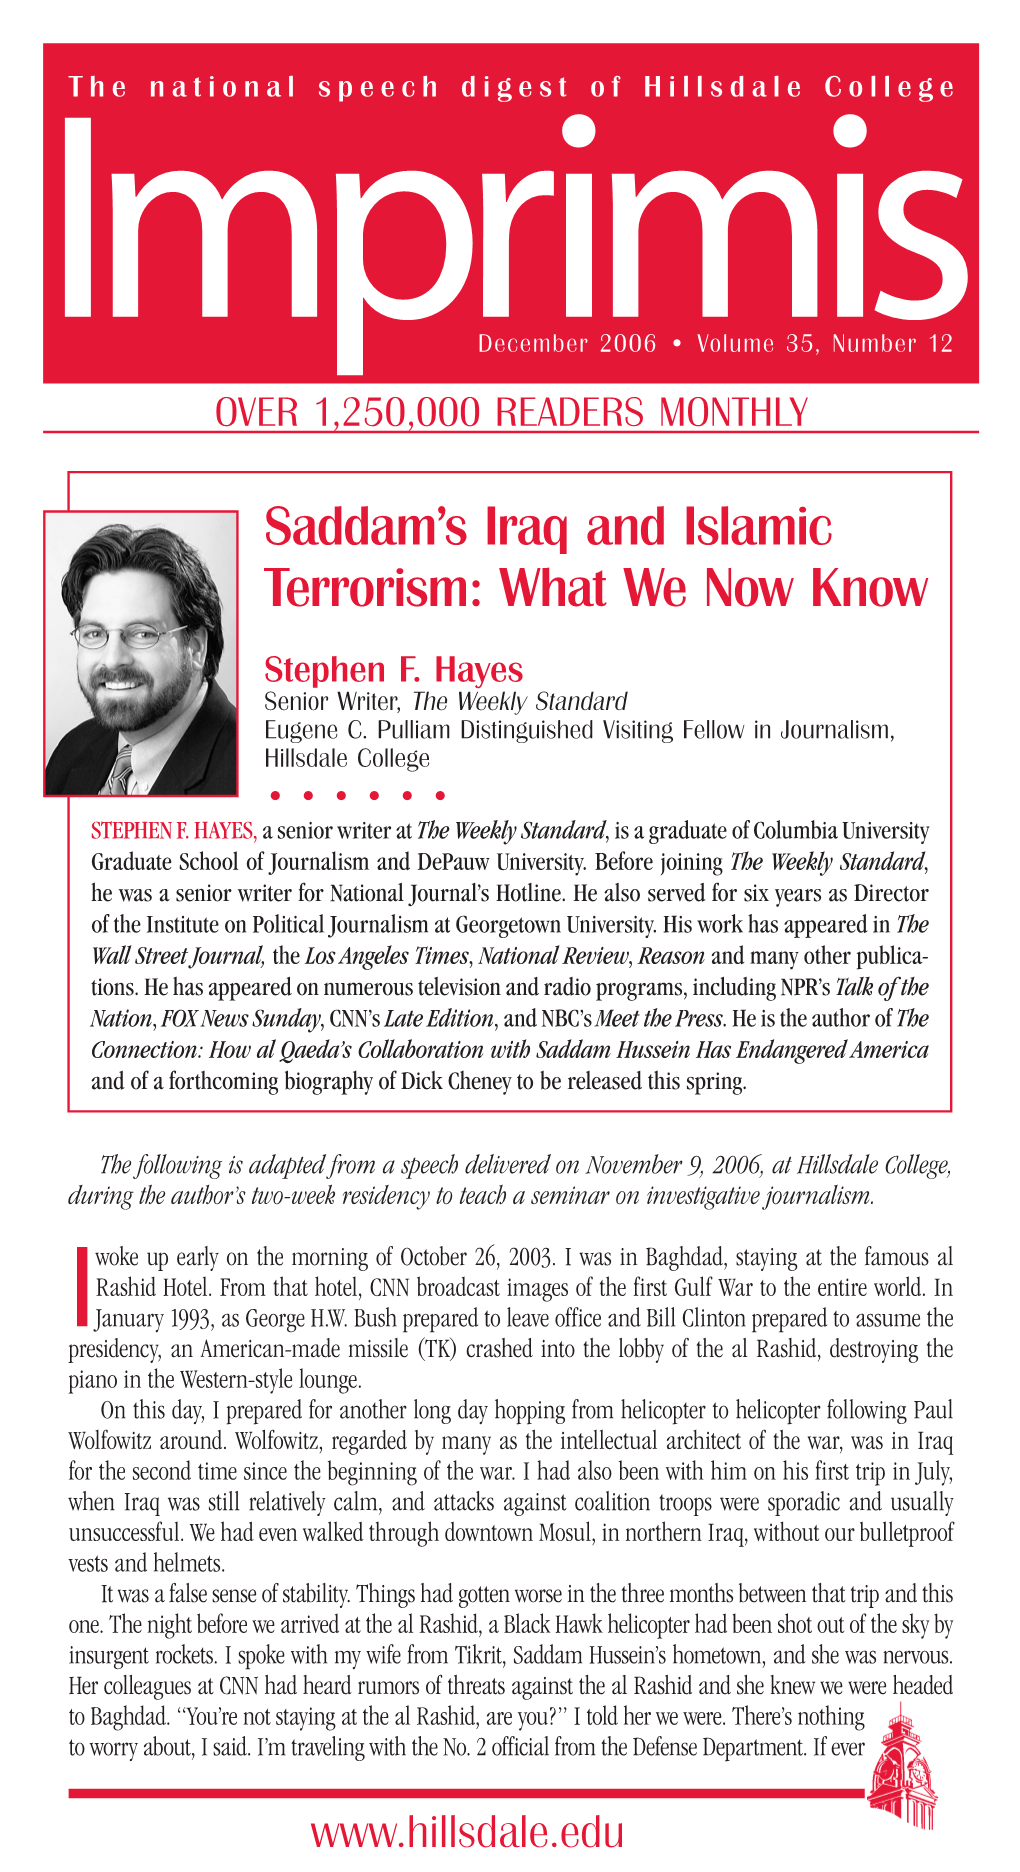 Saddam's Iraq and Islamic Terrorism